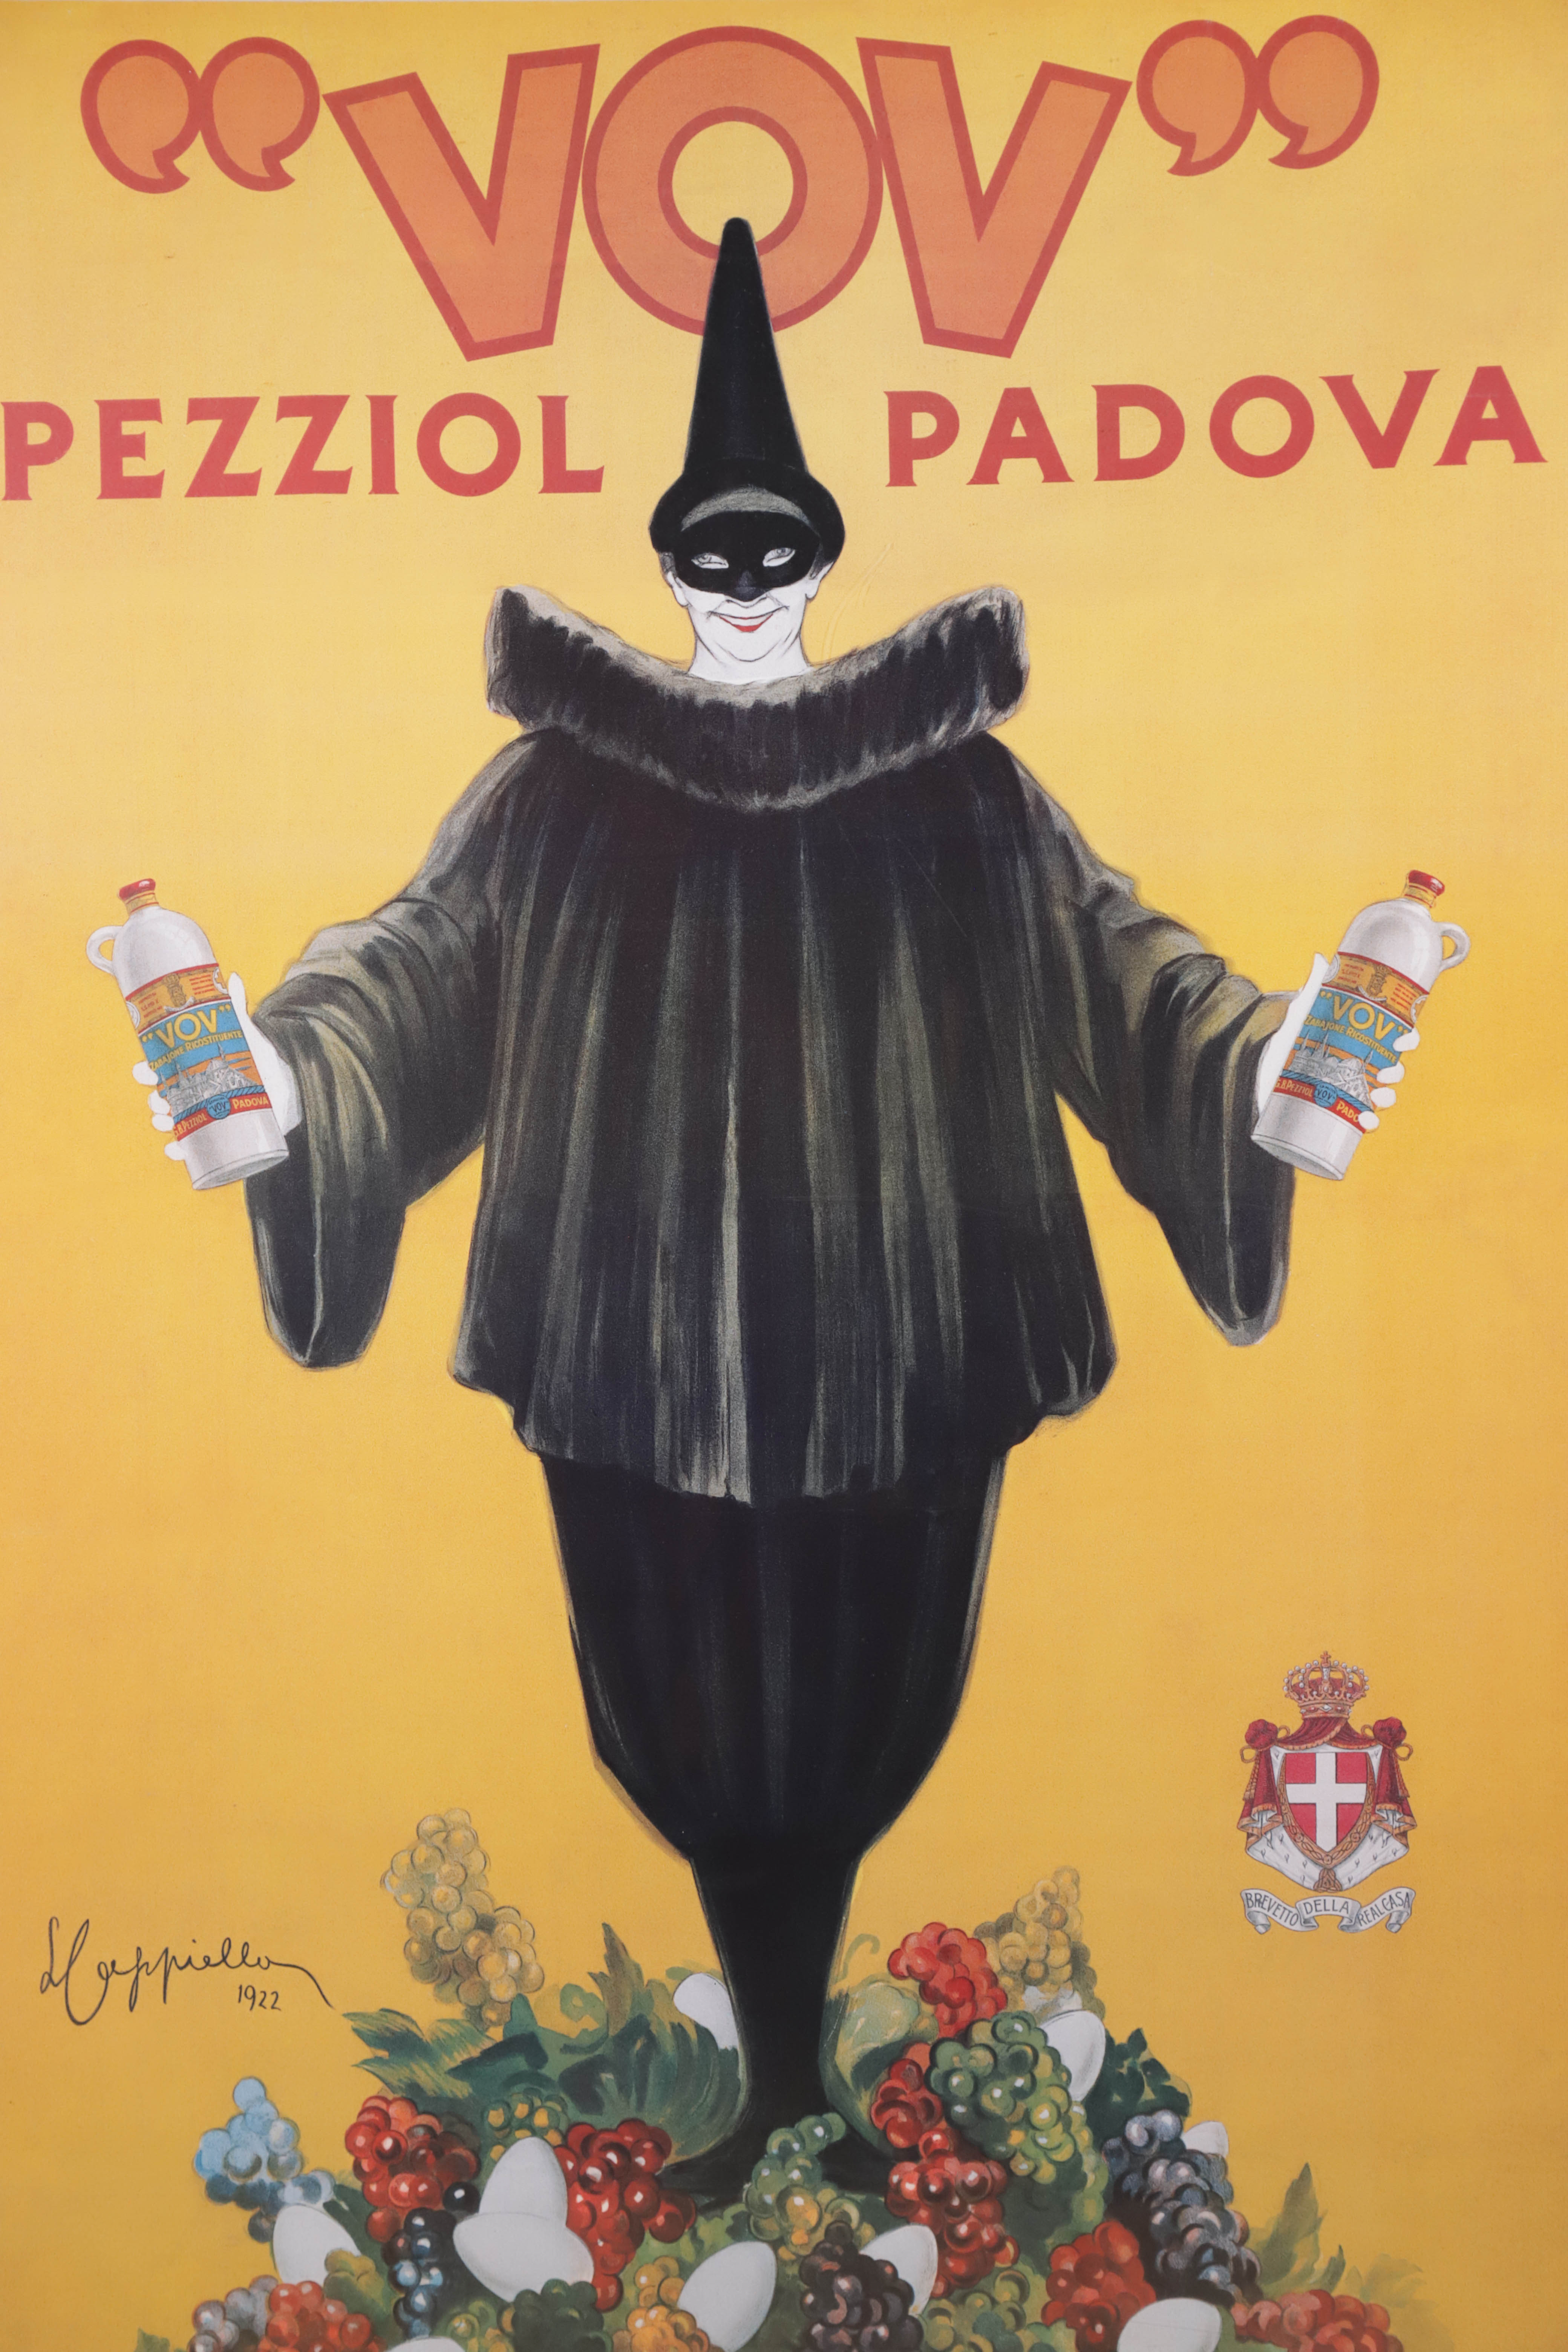 Contemporary Large Format Italian “Vov Pezziol Padova” Advertising Poster